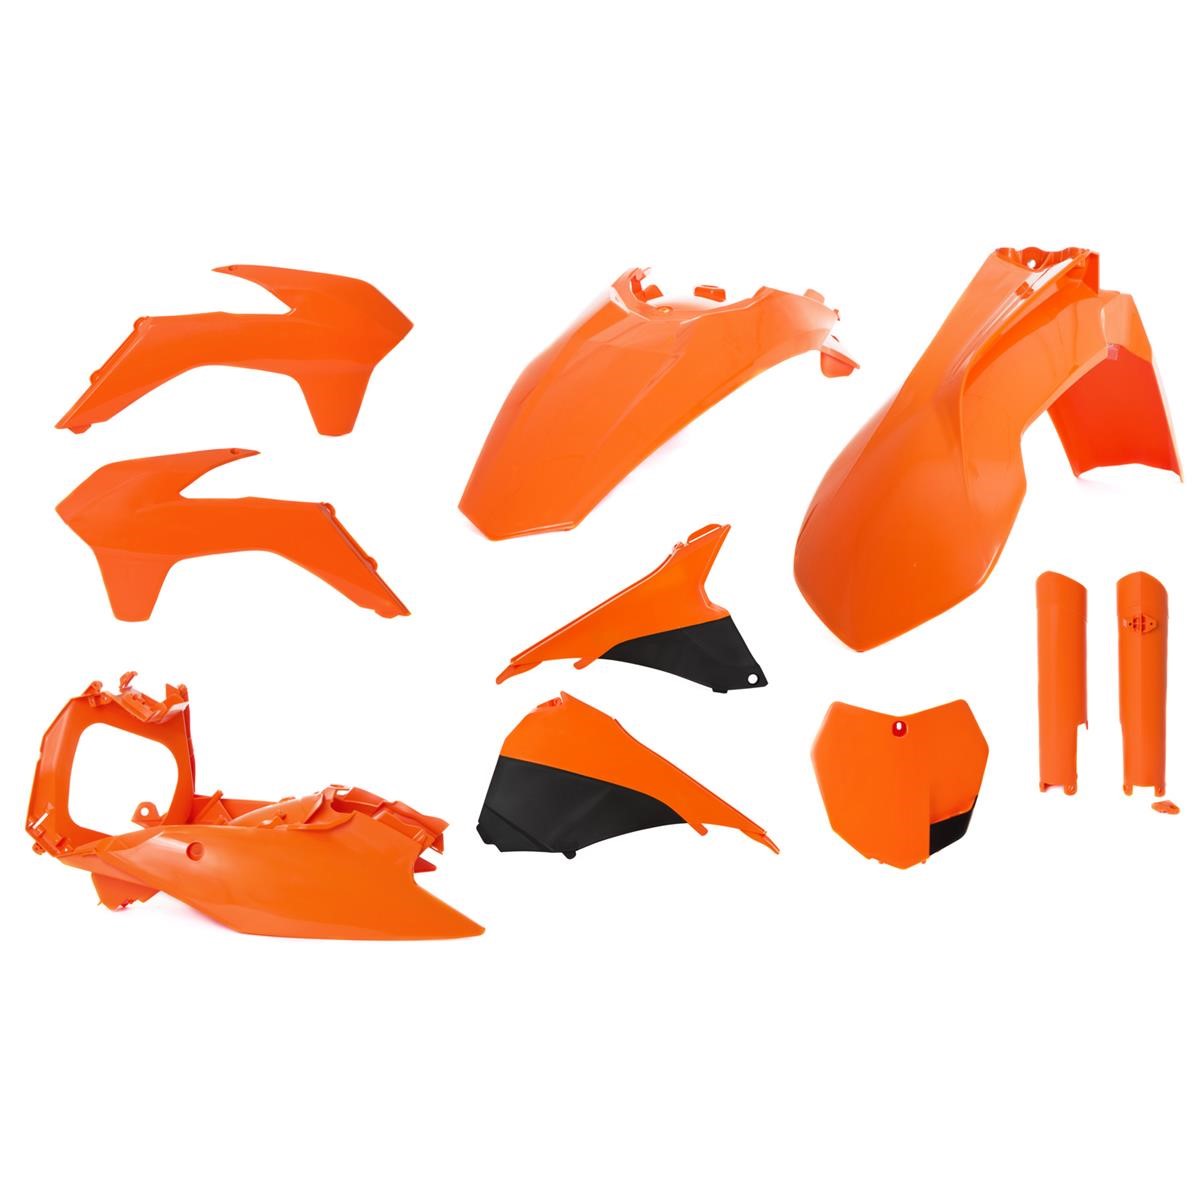 Acerbis Kit Plastiche completo Full-Kit KTM SX 125/150/250 13-14 / SX-F 13-14, Arancione